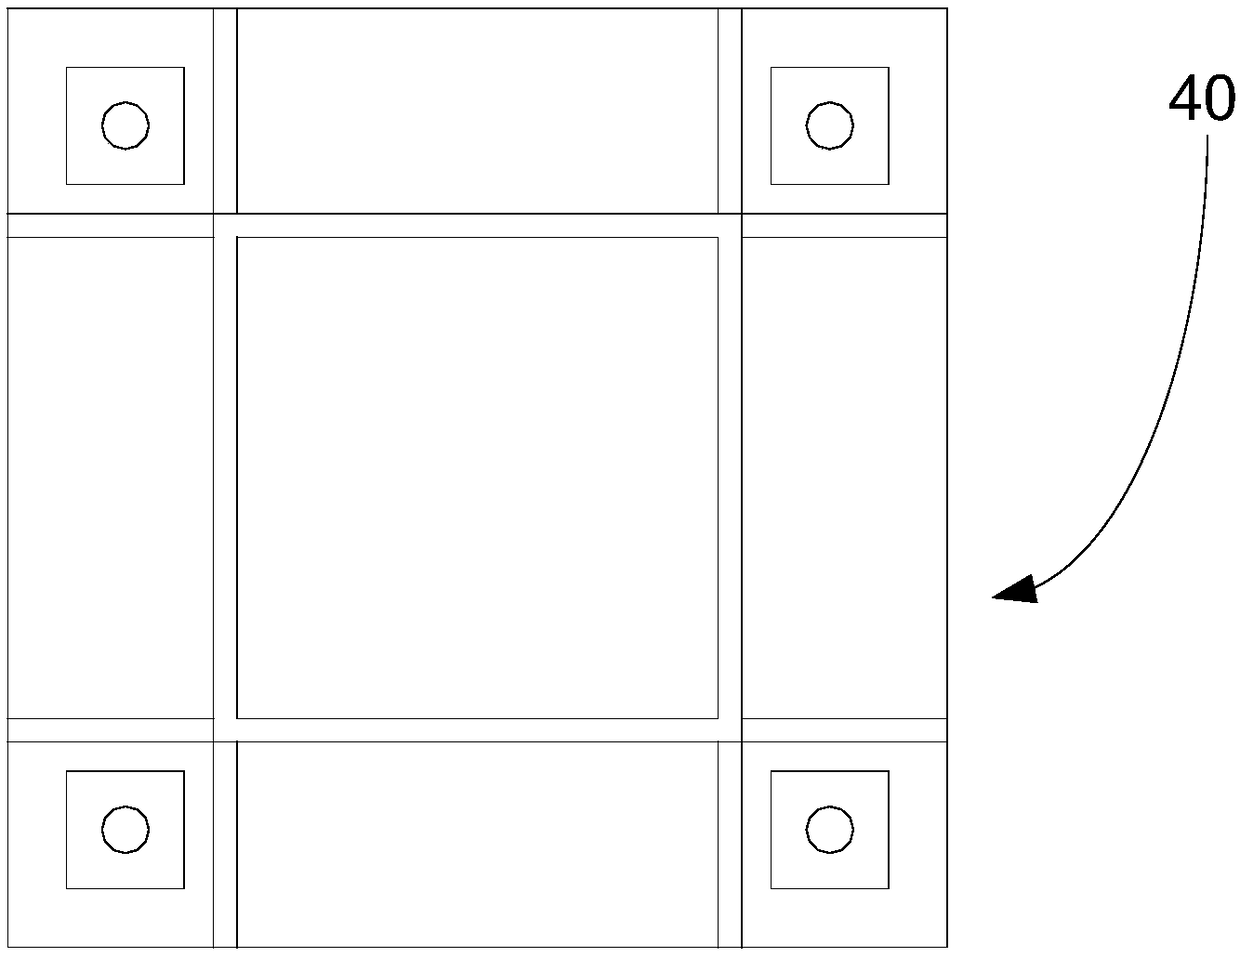 Alternative grouting method for steel-structure column feet